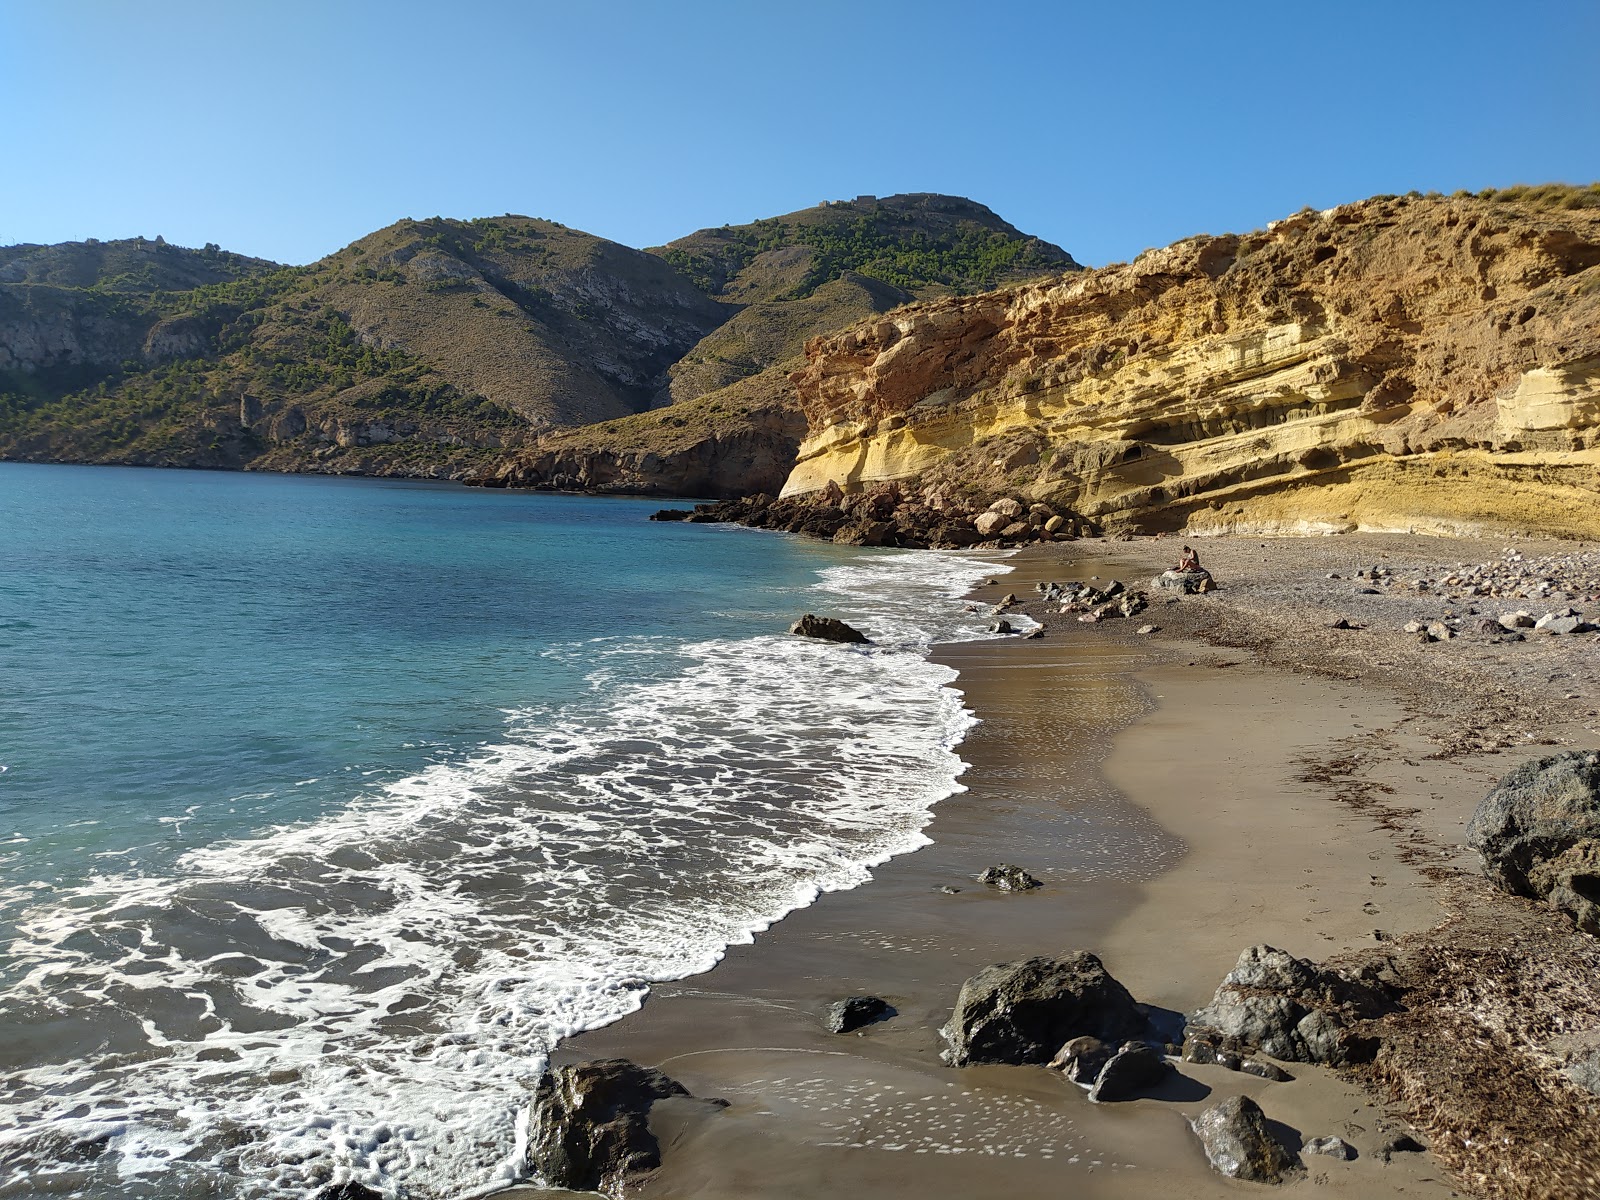 Foto von Playa de la Avispa mit grauer sand&kies Oberfläche